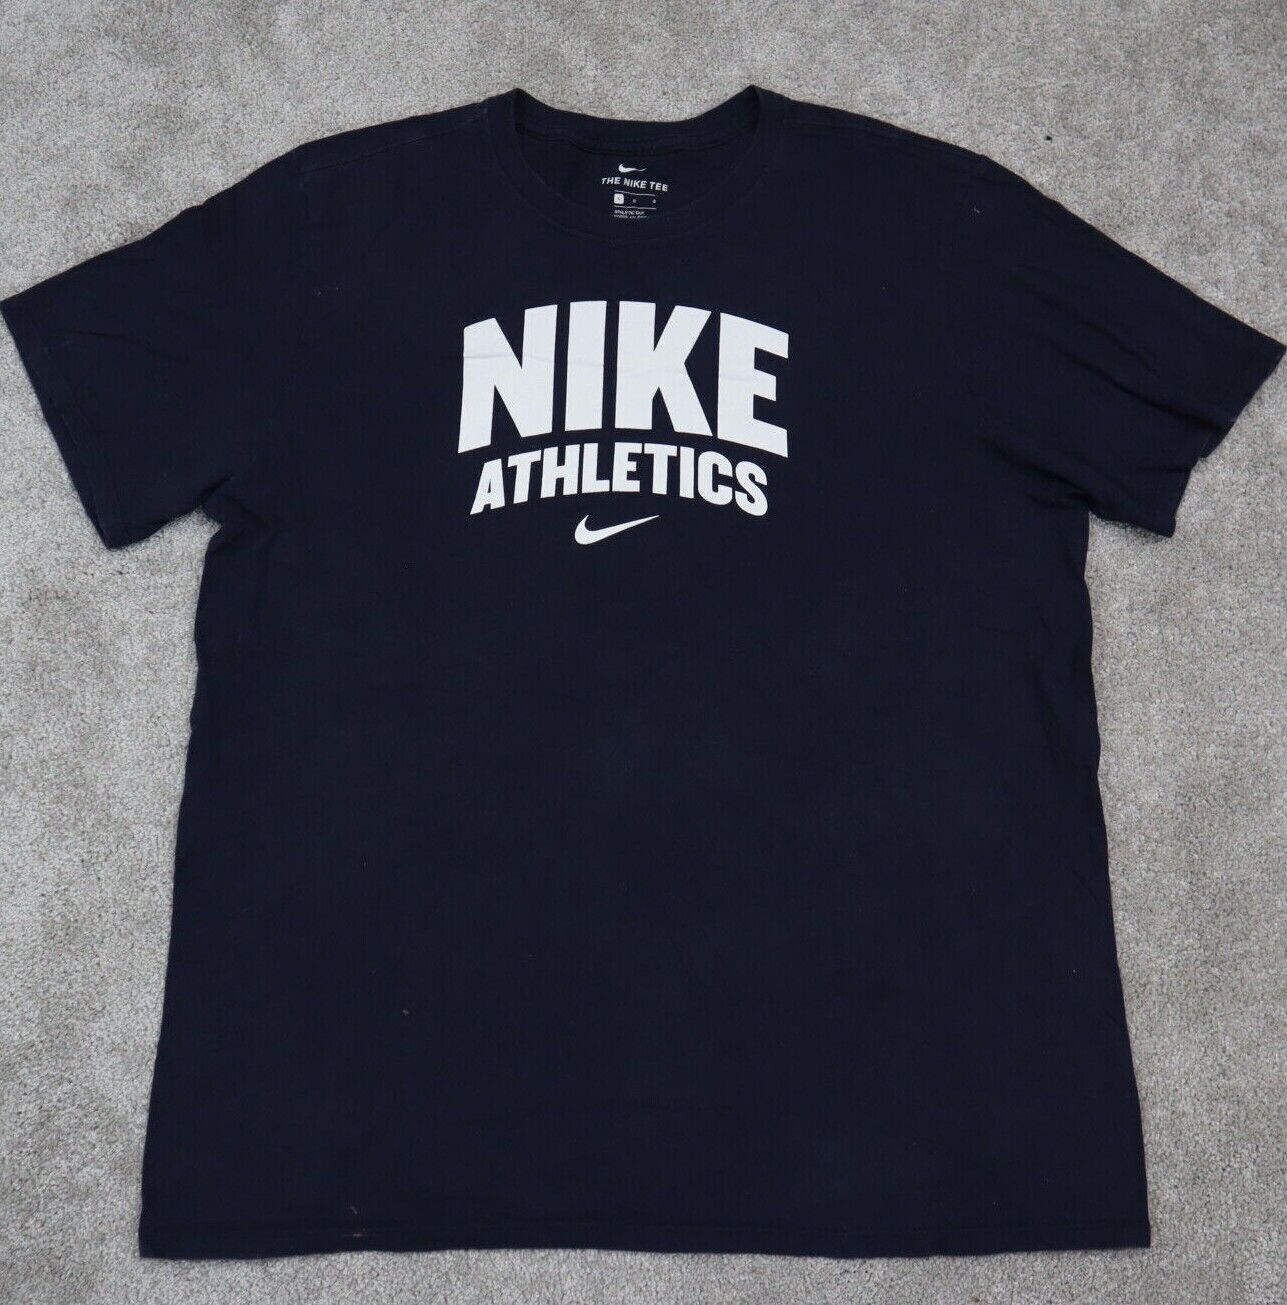 Nike Athletics T-Shirt Men's Black Large L Short Sleeves Graphics Spor